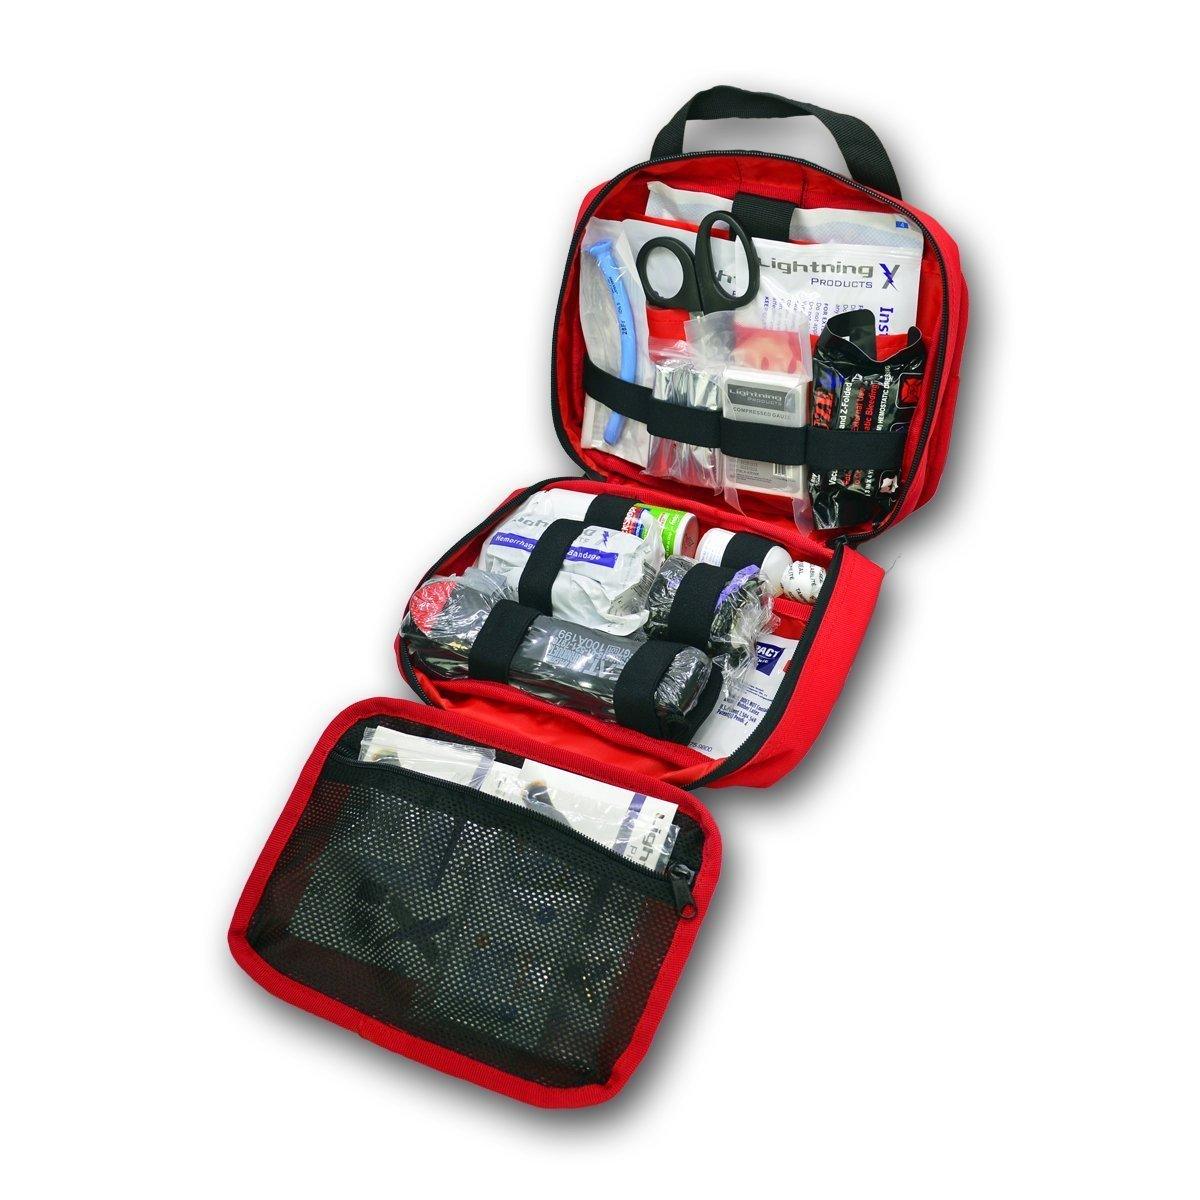 MEDIC-X Vehicle Trauma Kit Pouch - Vendor